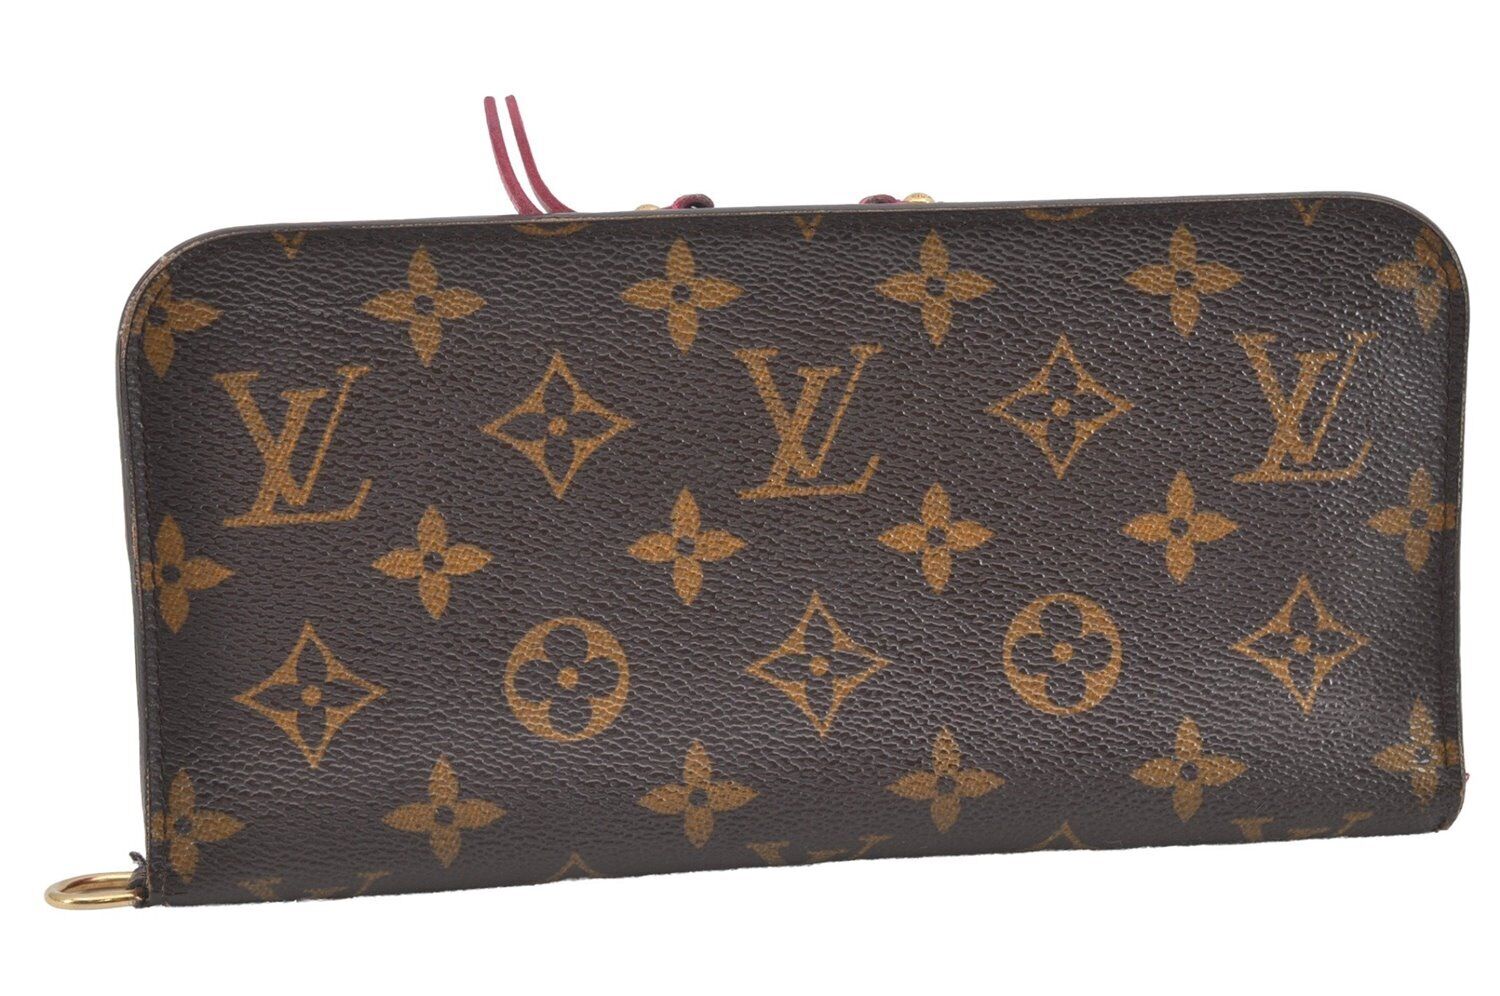 Louis Vuitton Epicea Bifold Wallet